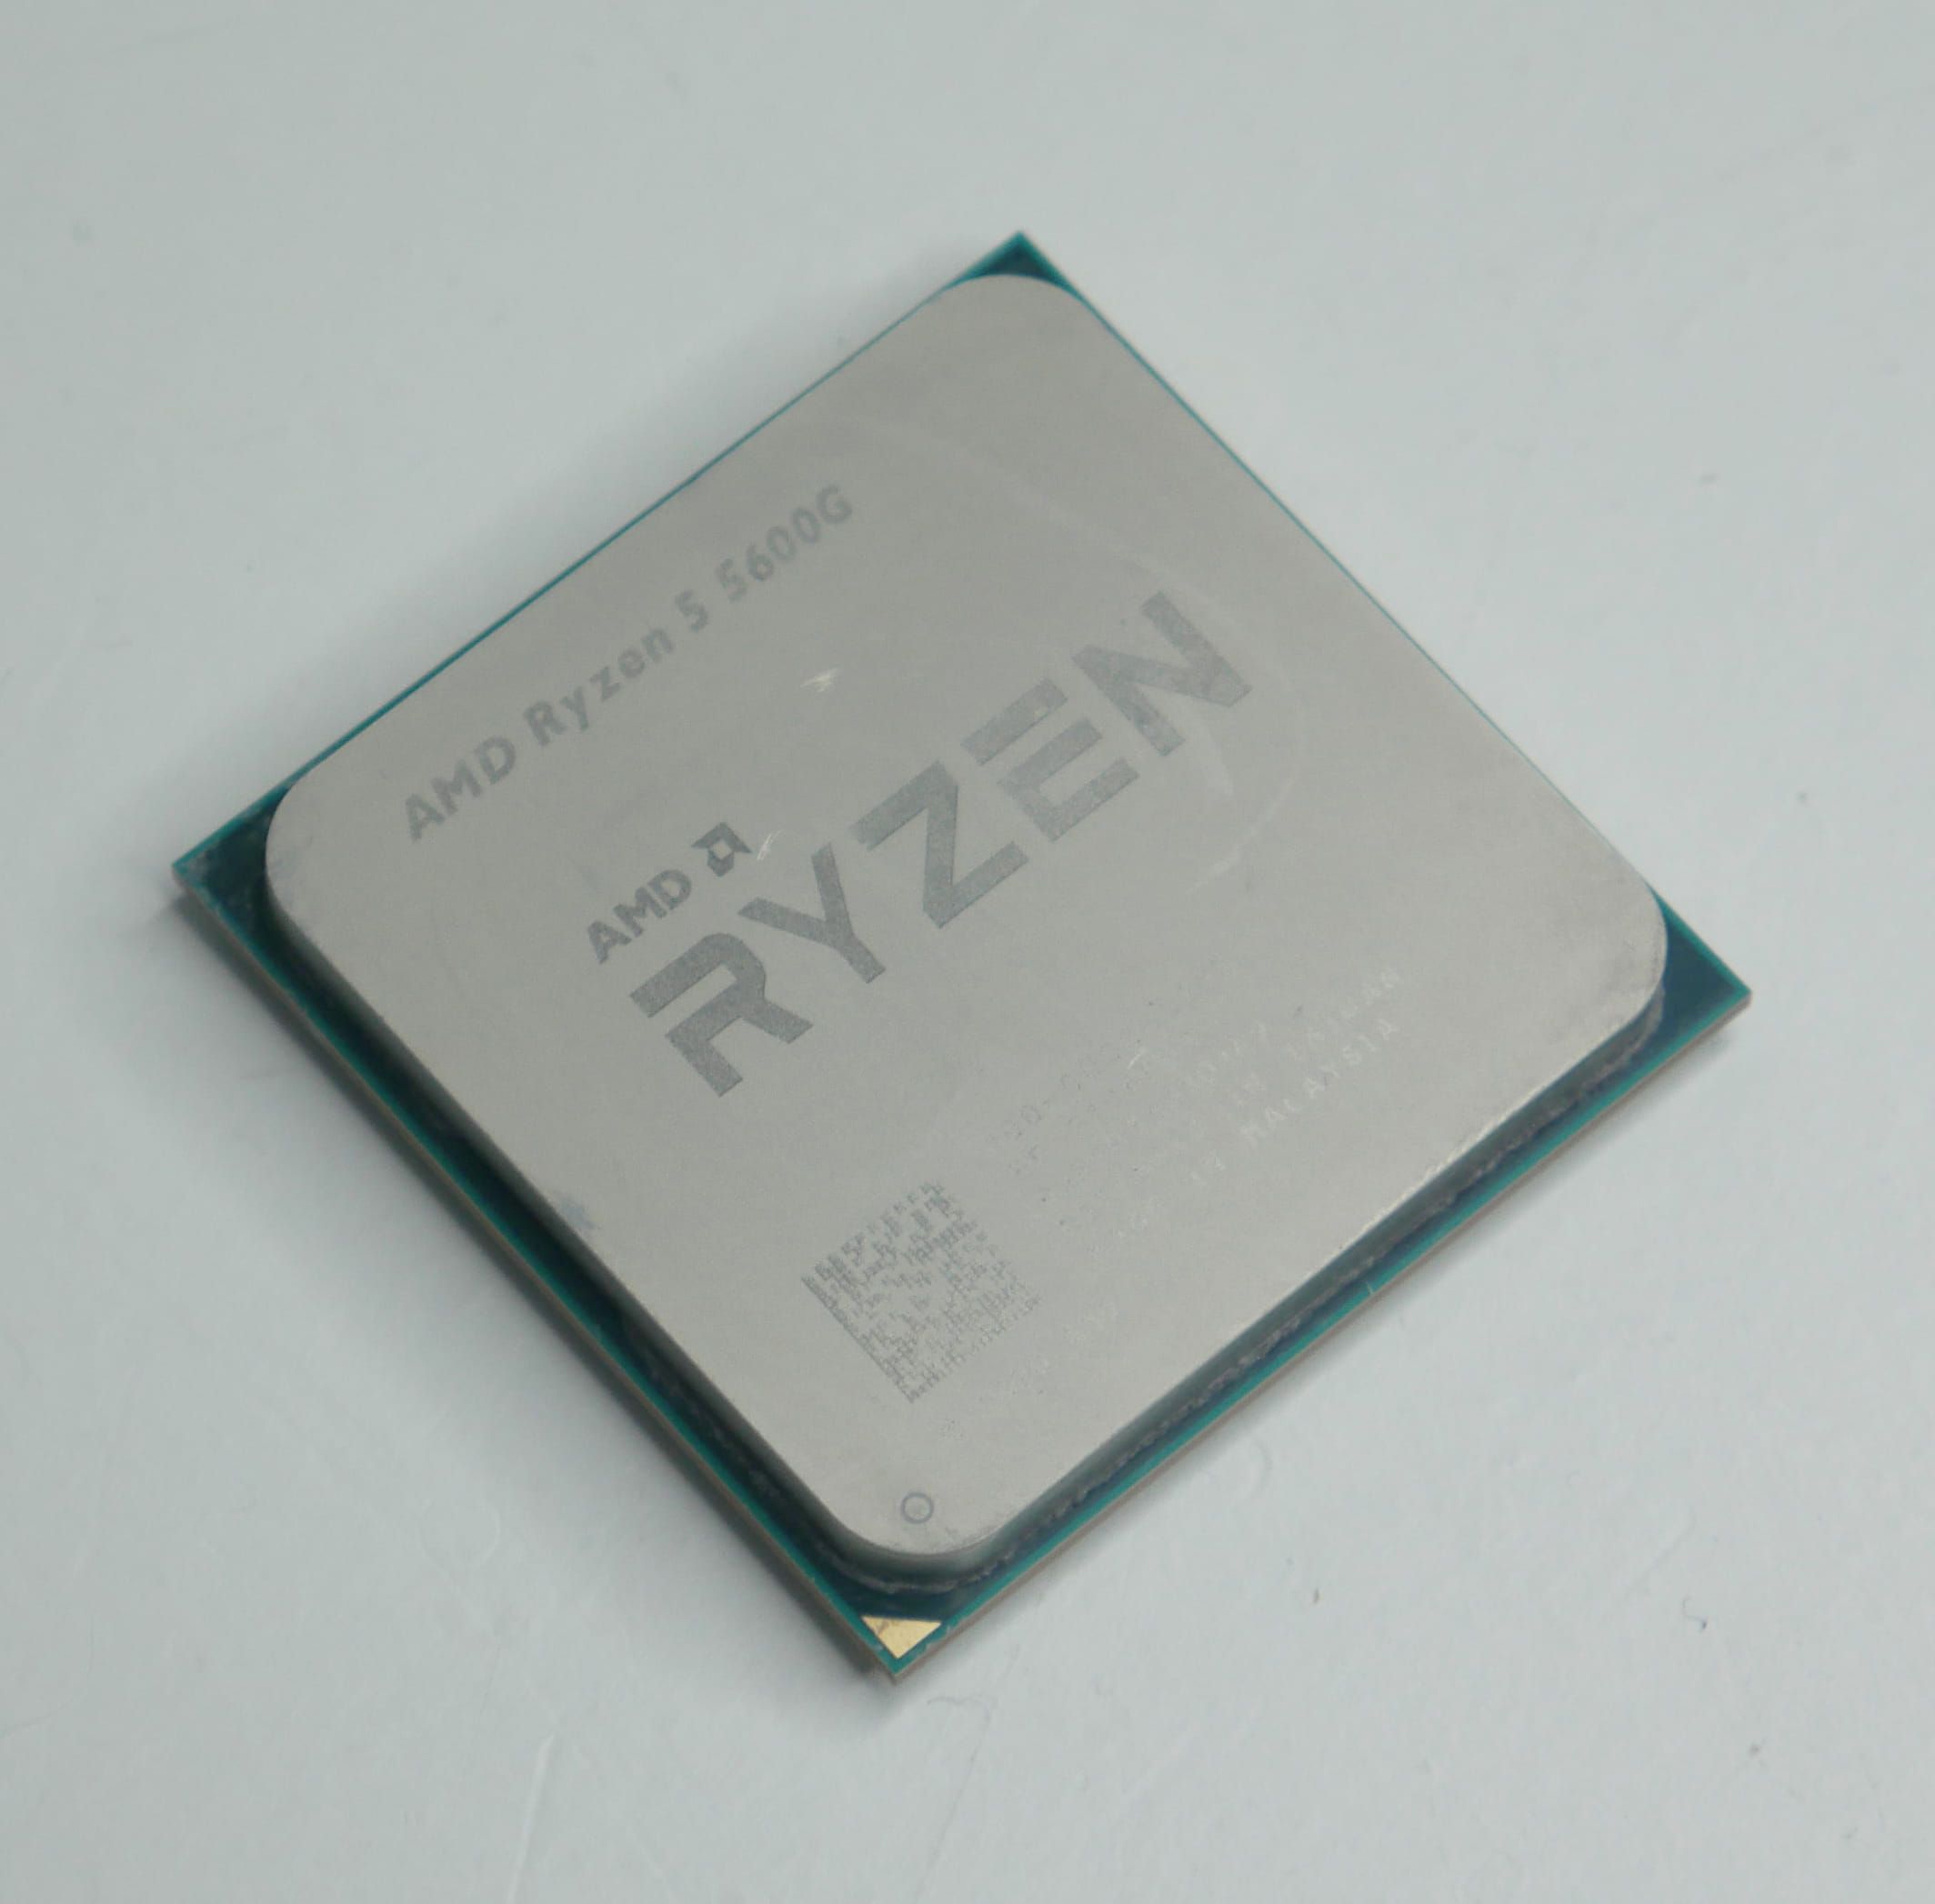 Review AMD Ryzen 5 5600G 30